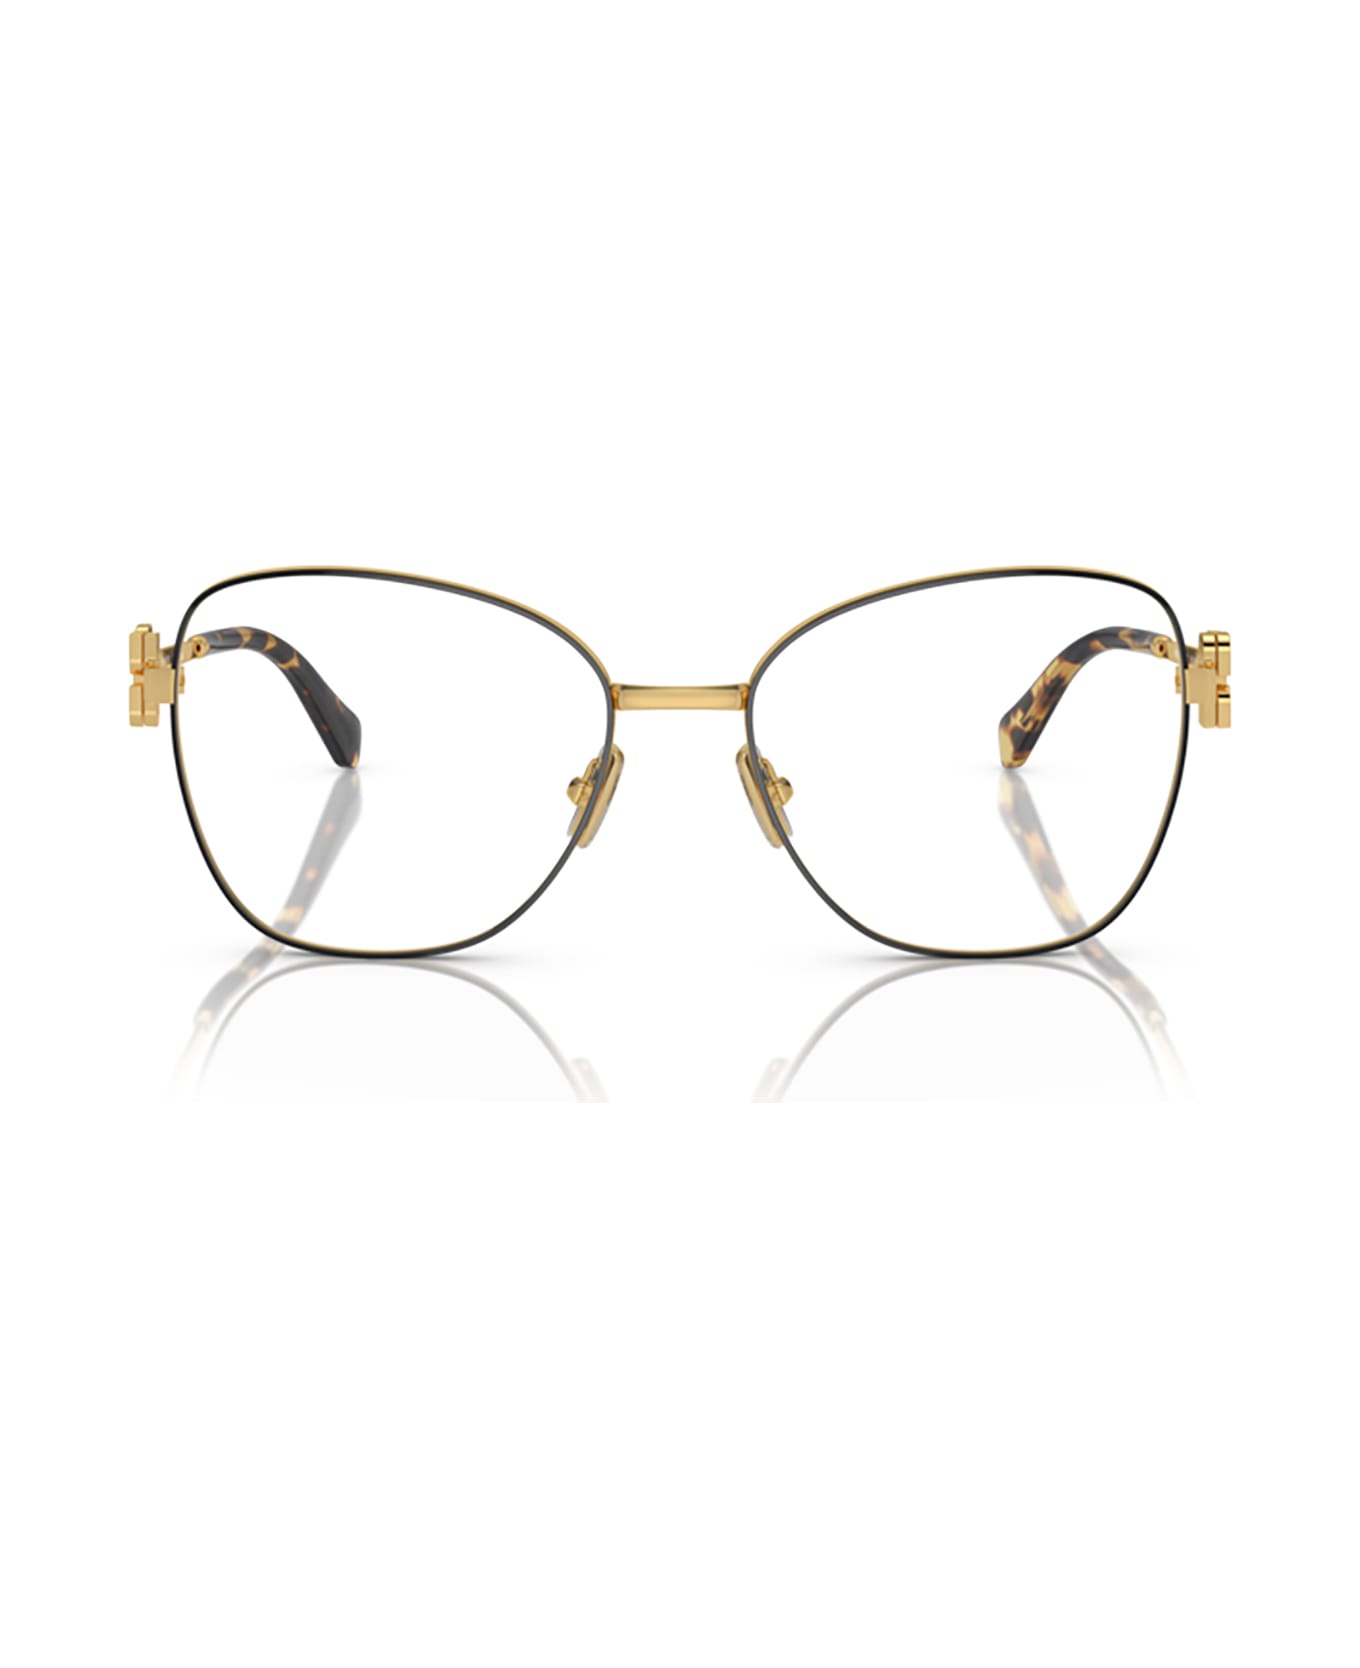 Miu Miu Eyewear Mu 50xv Black / Gold Glasses - Black / Gold